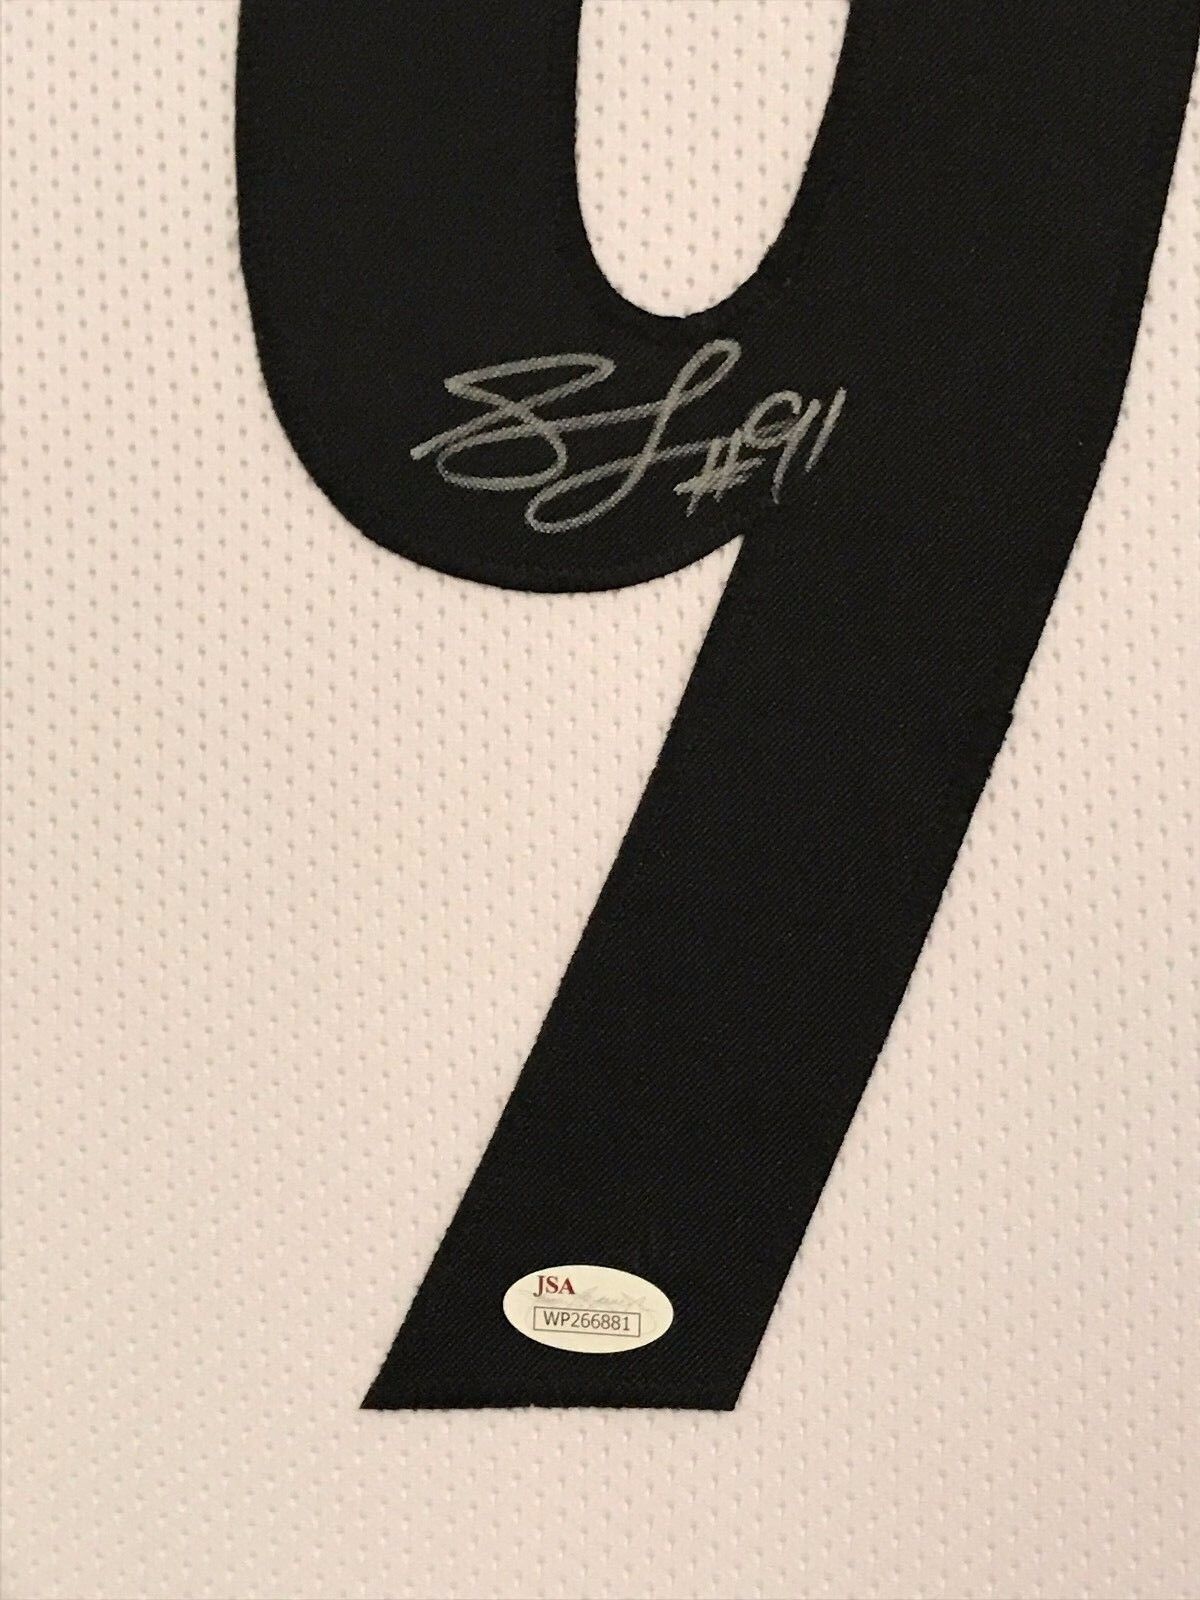 MVP Authentics Framed Stephon Tuitt Autographed Signed Pittsburgh Steelers Jersey Jsa Coa 360 sports jersey framing , jersey framing